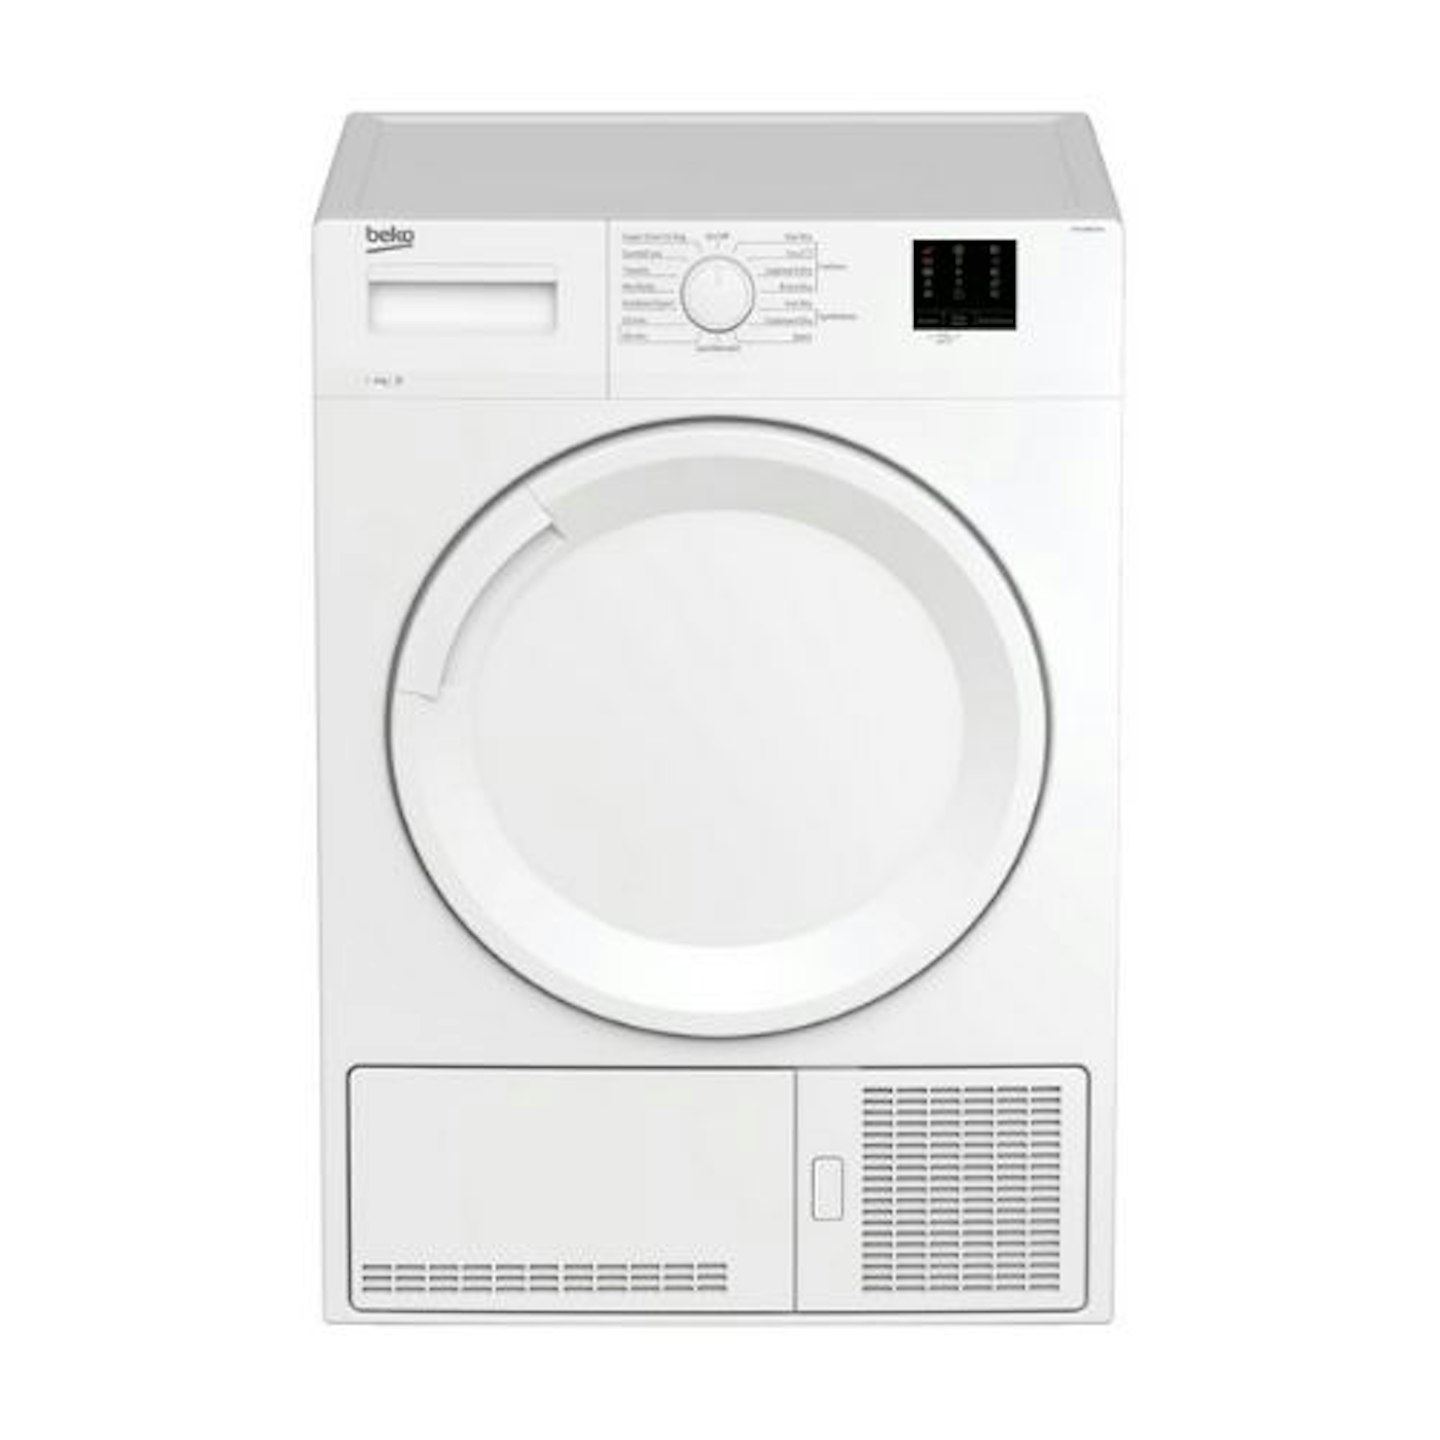 BEKO DTKCE80021W 8 kg Condenser Tumble Dryer - White